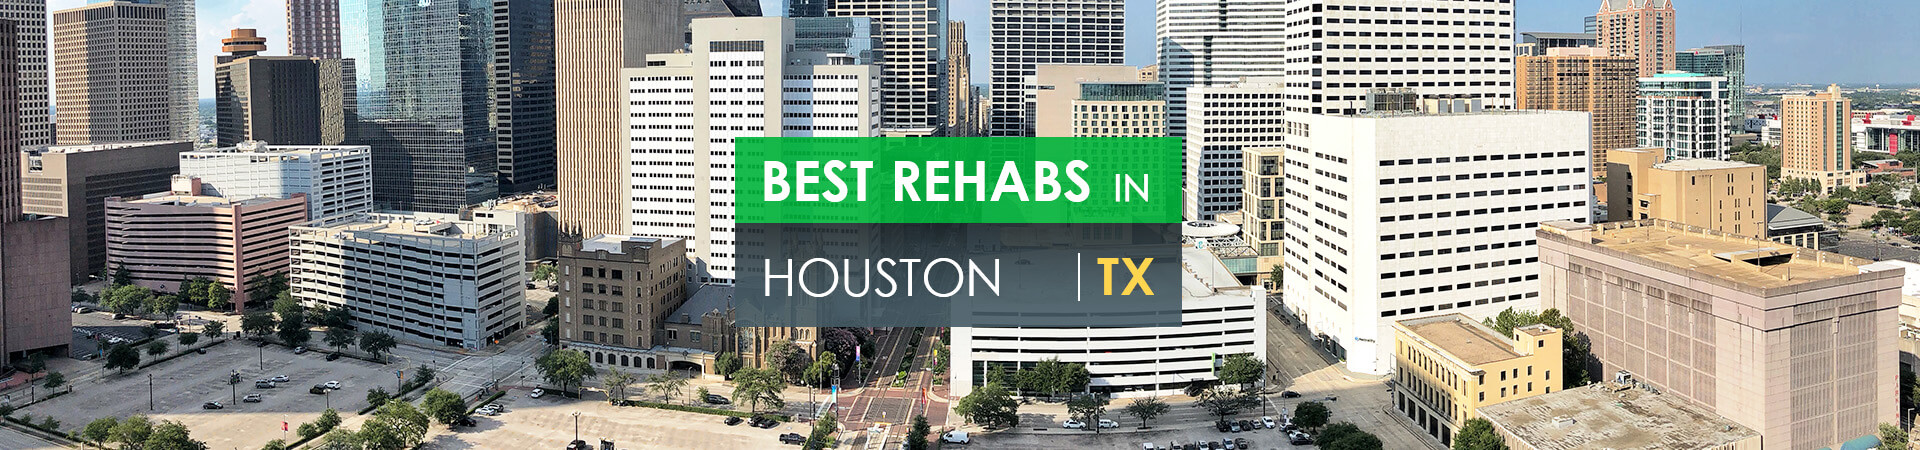 Best rehabs in Houston, TX